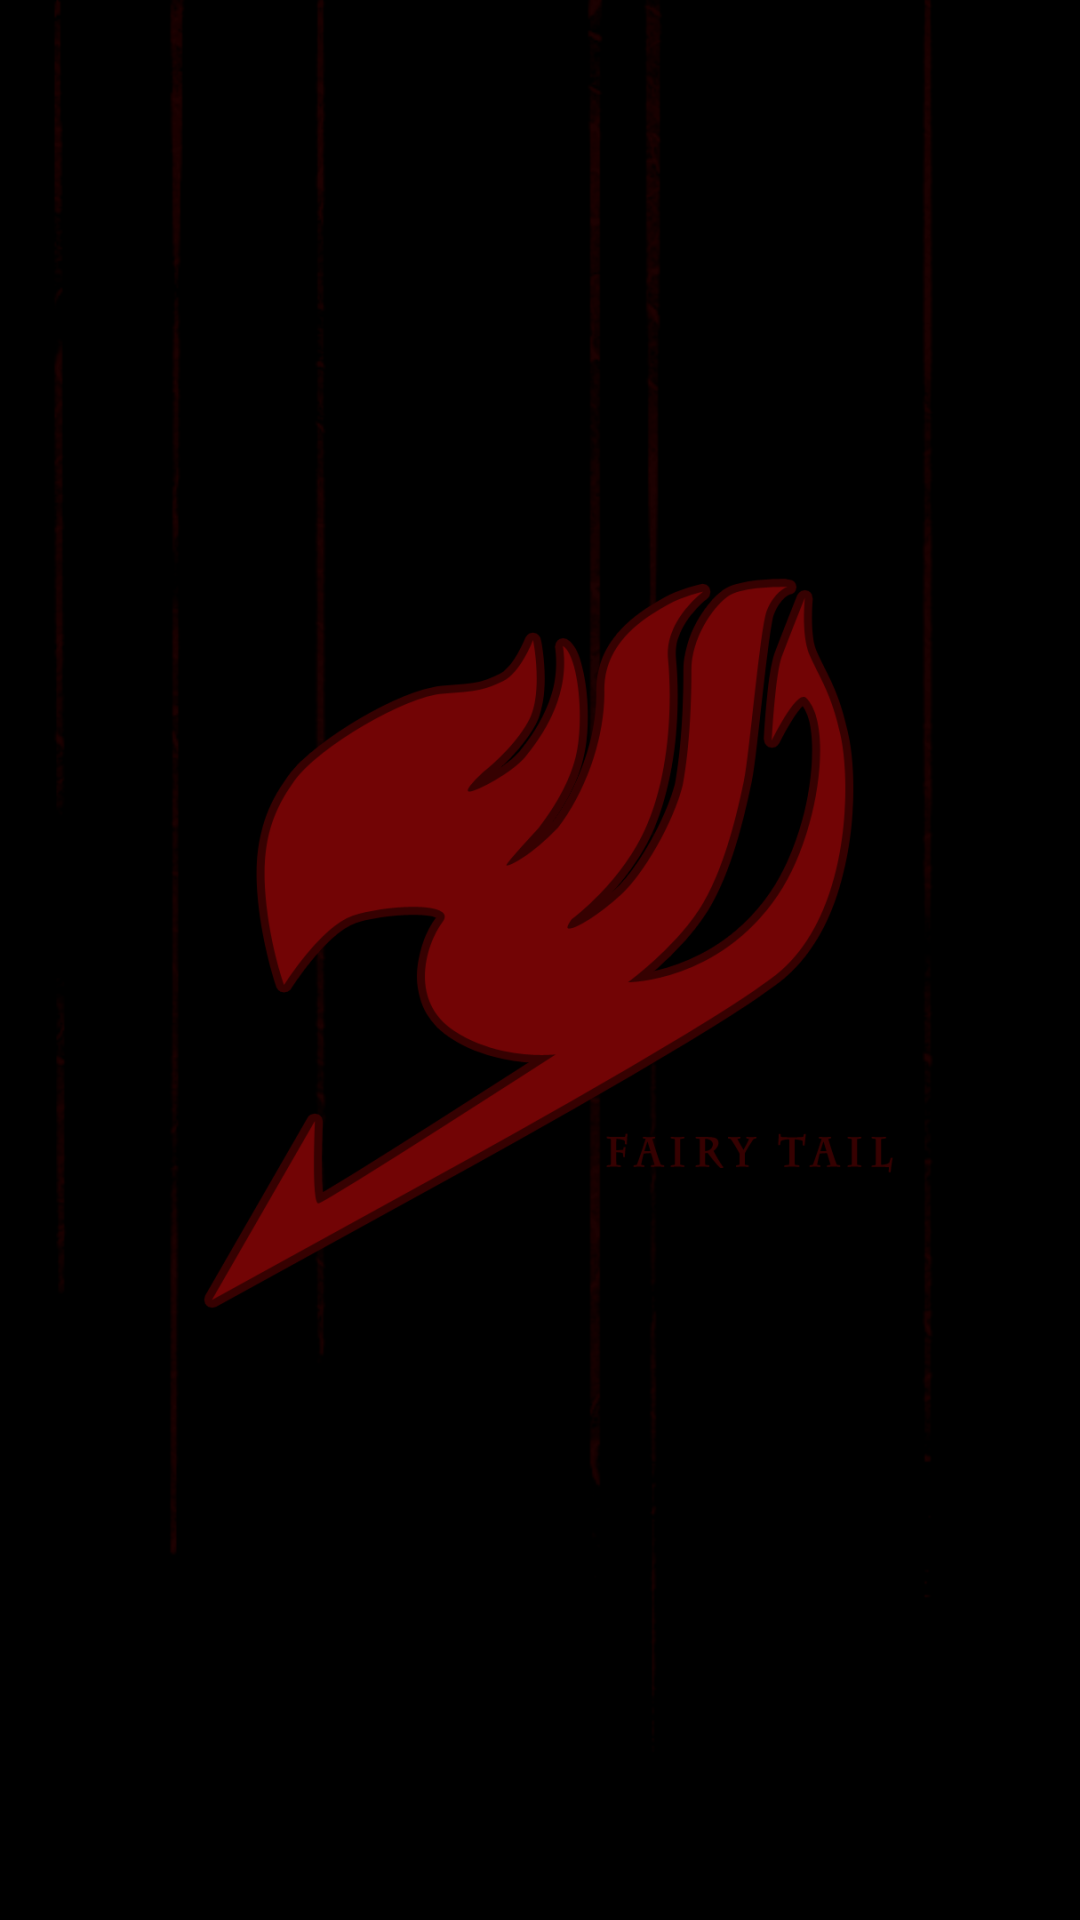 Fairy Tail Logo Wallpaper Full HD Cinema Wallpaper 1080p